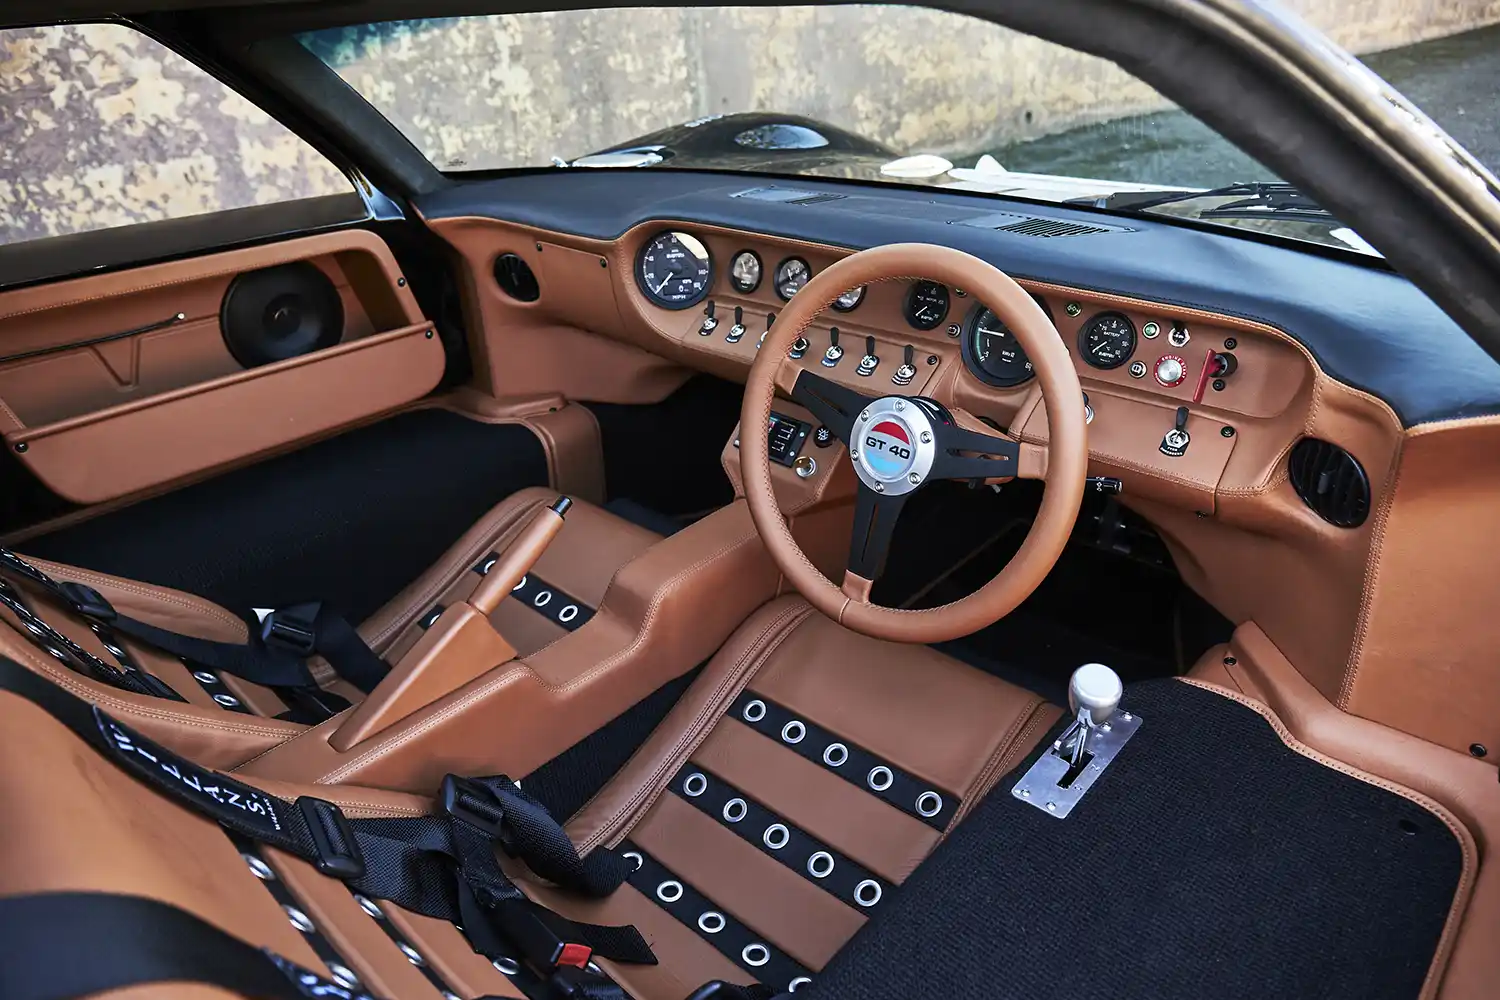 Ford GT40 GT – Re-Volt World